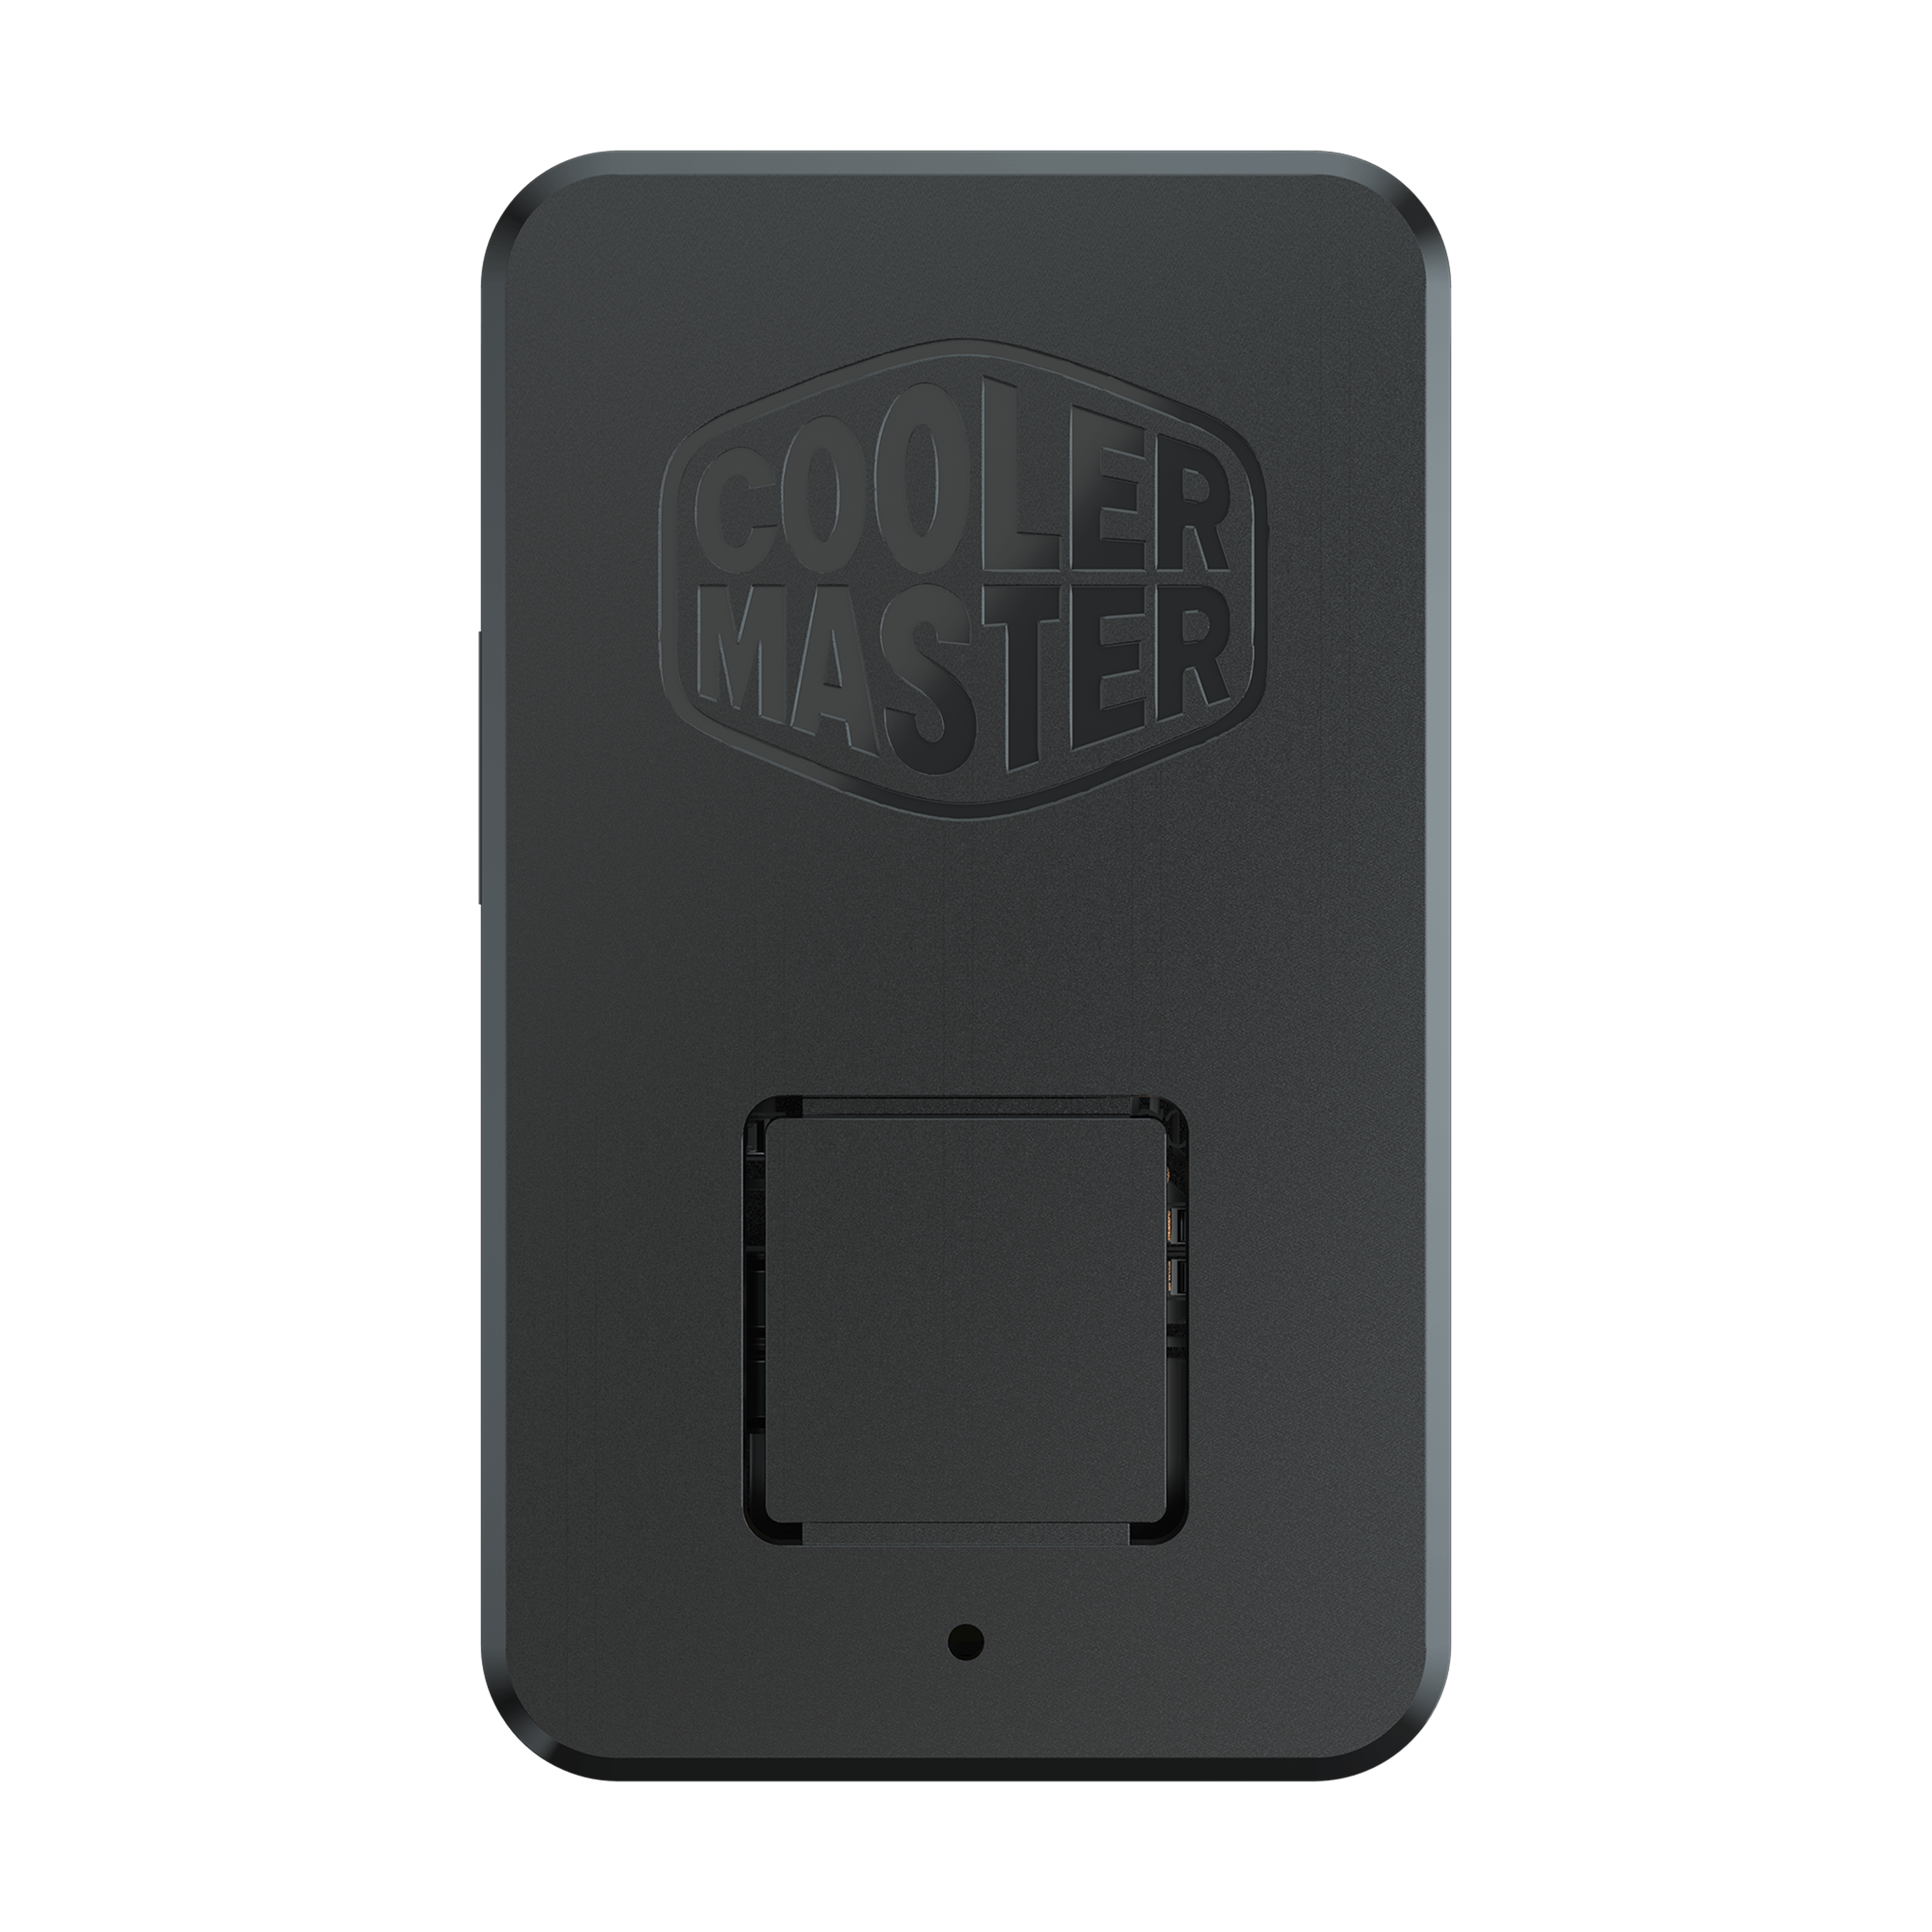 Cooler Master - Mini Controleur LED RGB Adressable